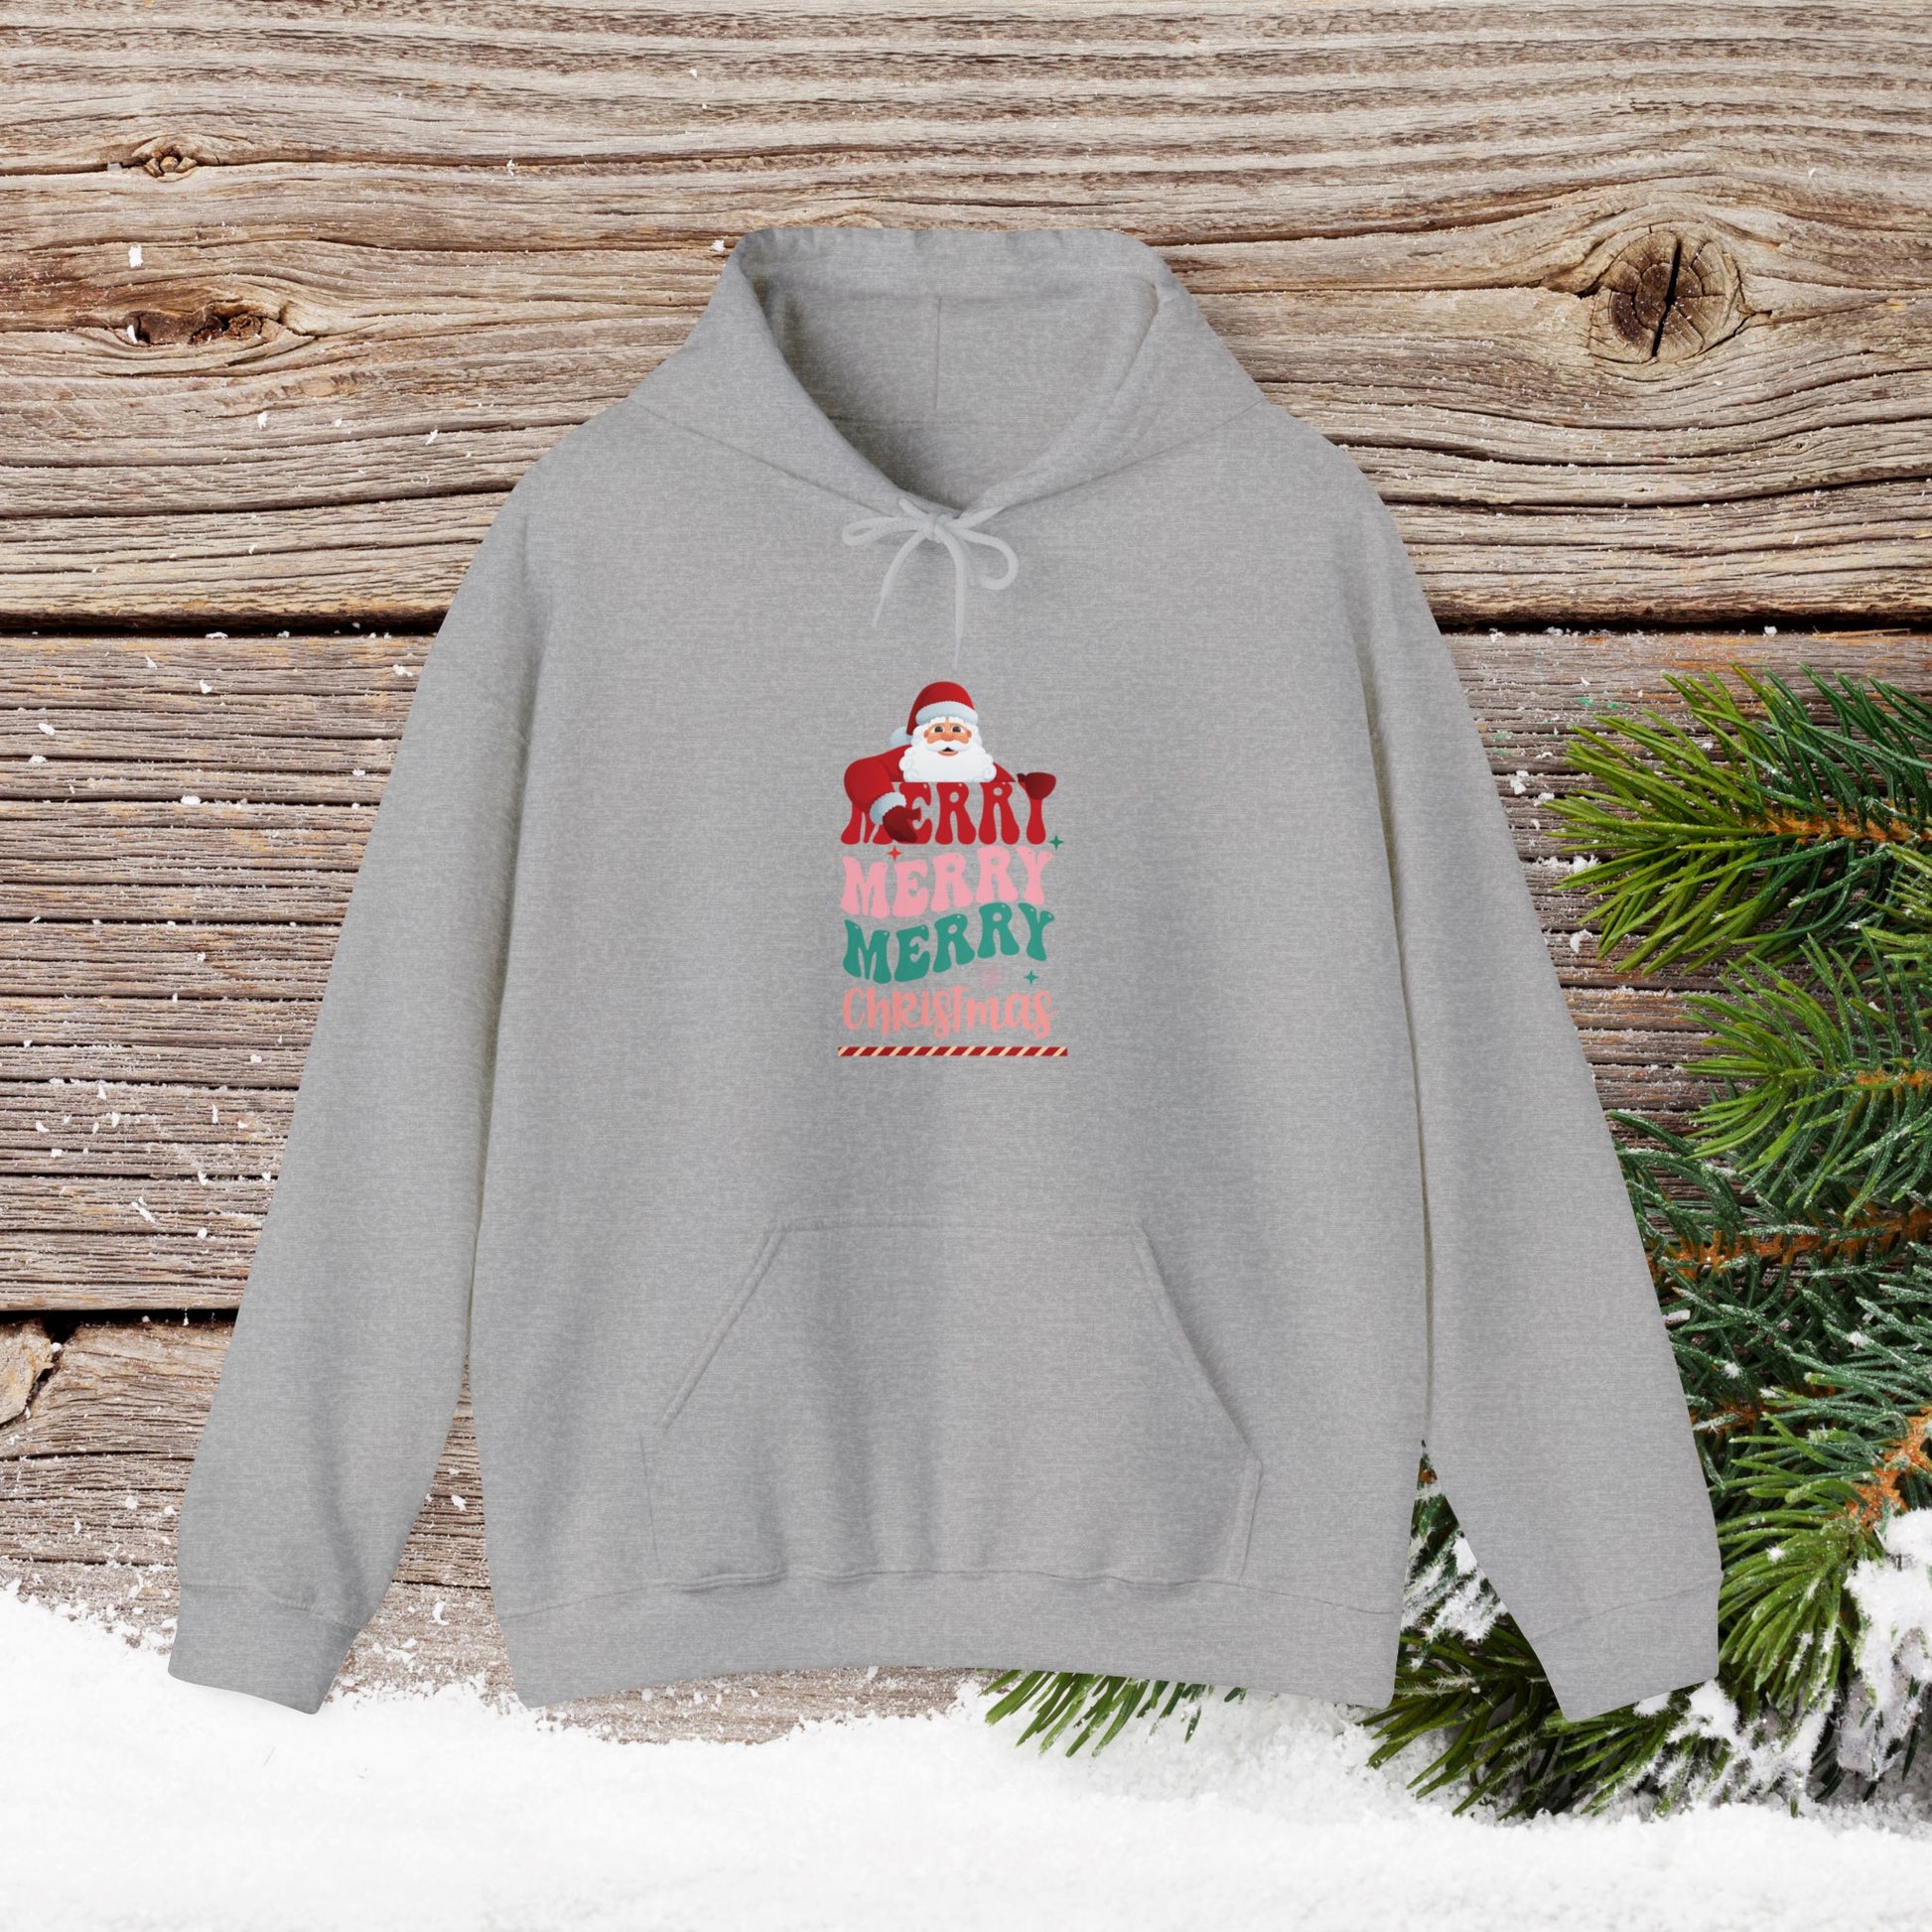 Christmas Hoodie - Merry Merry Merry Christmas - Cute Christmas Shirts - Youth and Adult Christmas Hooded Sweatshirt Hooded Sweatshirt Graphic Avenue Light Gray Adult Small 